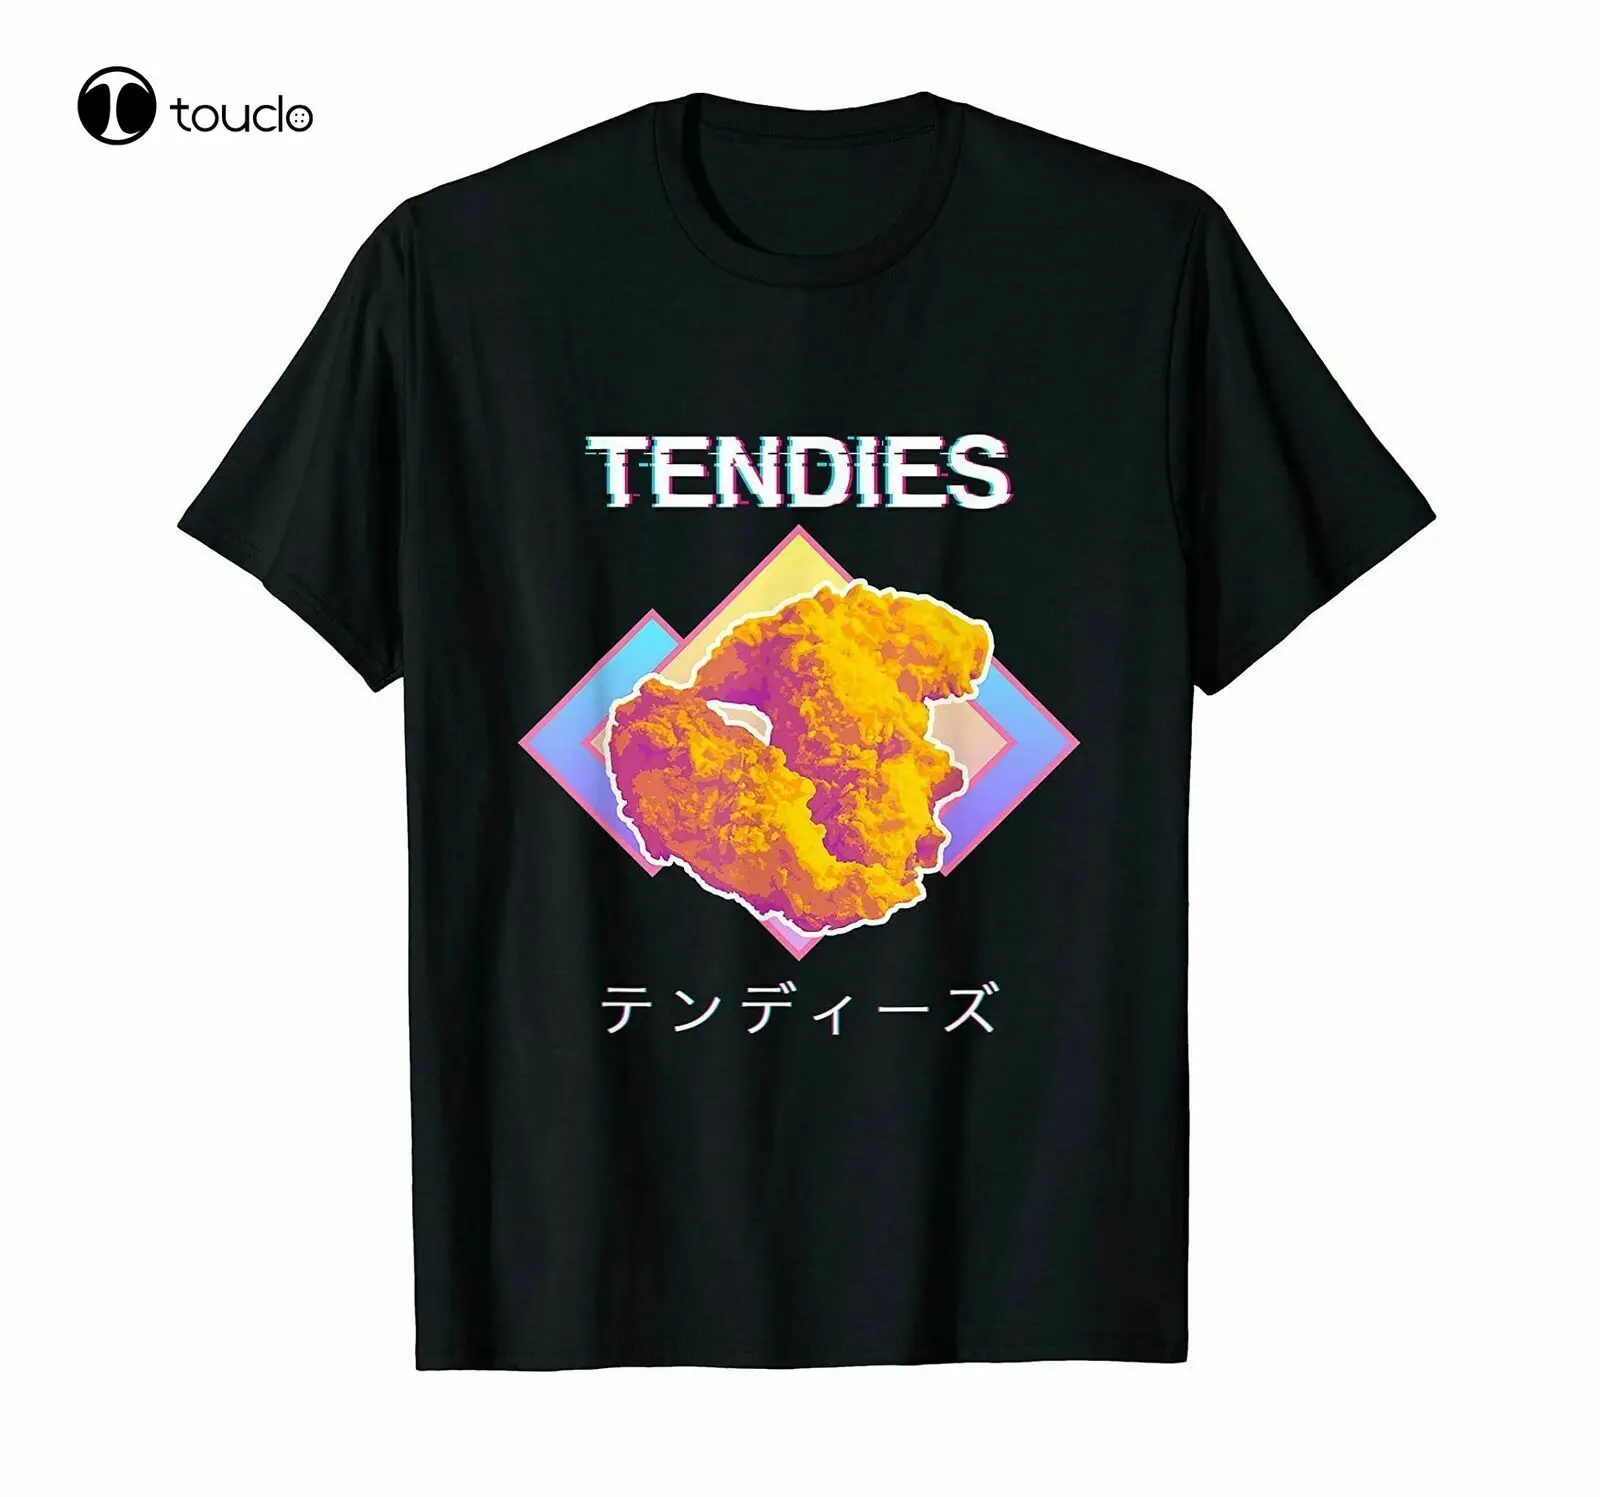 

Vaporwave Tendies Chicken Tenders Japanese Kanji T-Shirts Cotton Trend 2021 Tee Shirt unisex